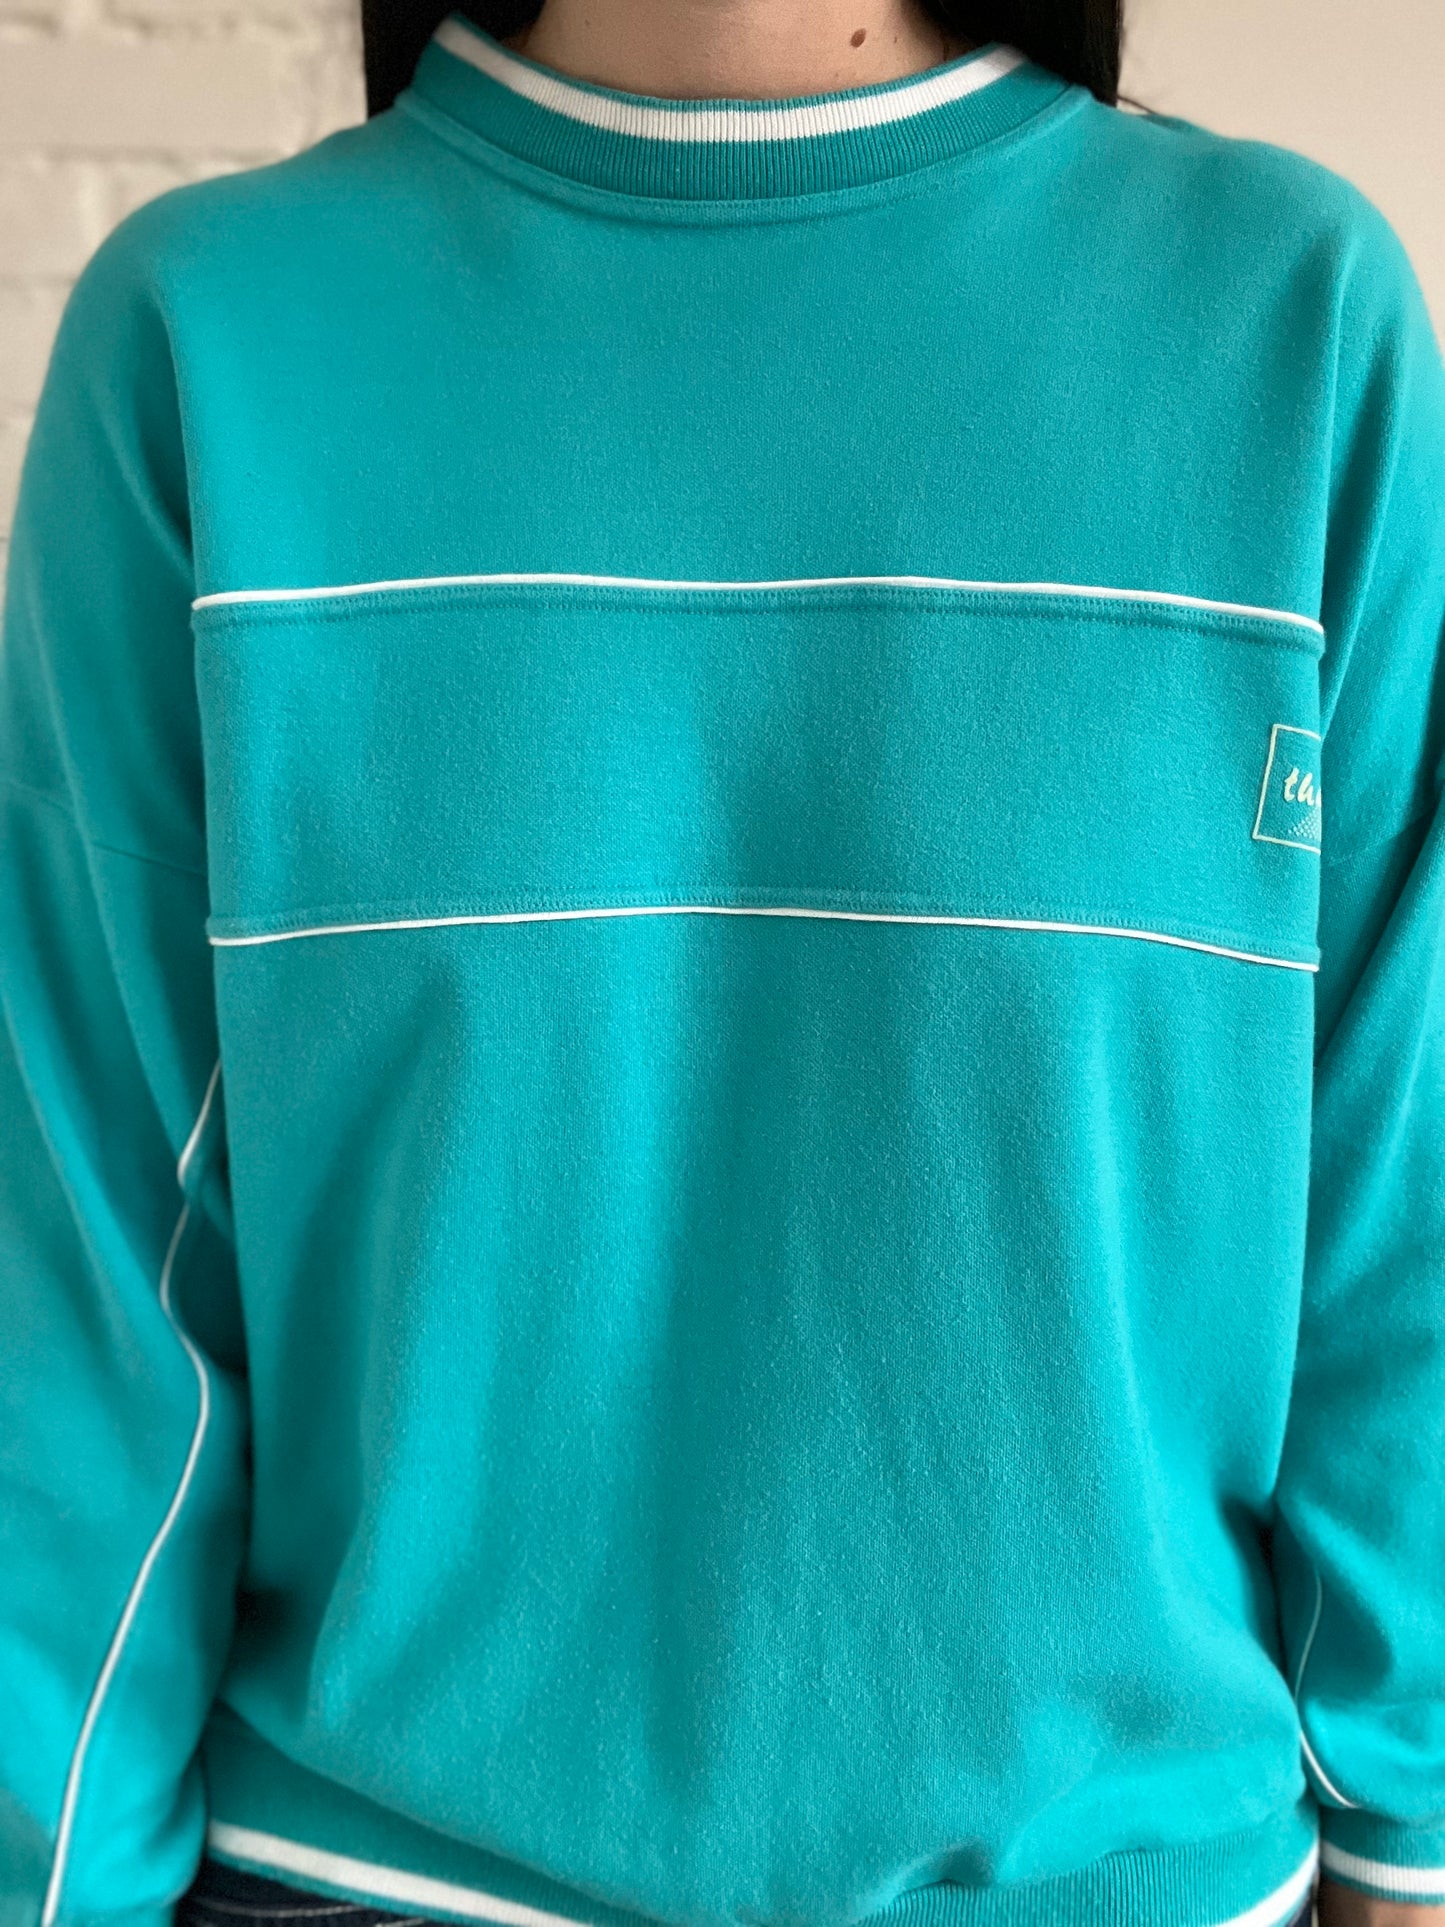 90s "That's In" Graphic Sweatshirt - L